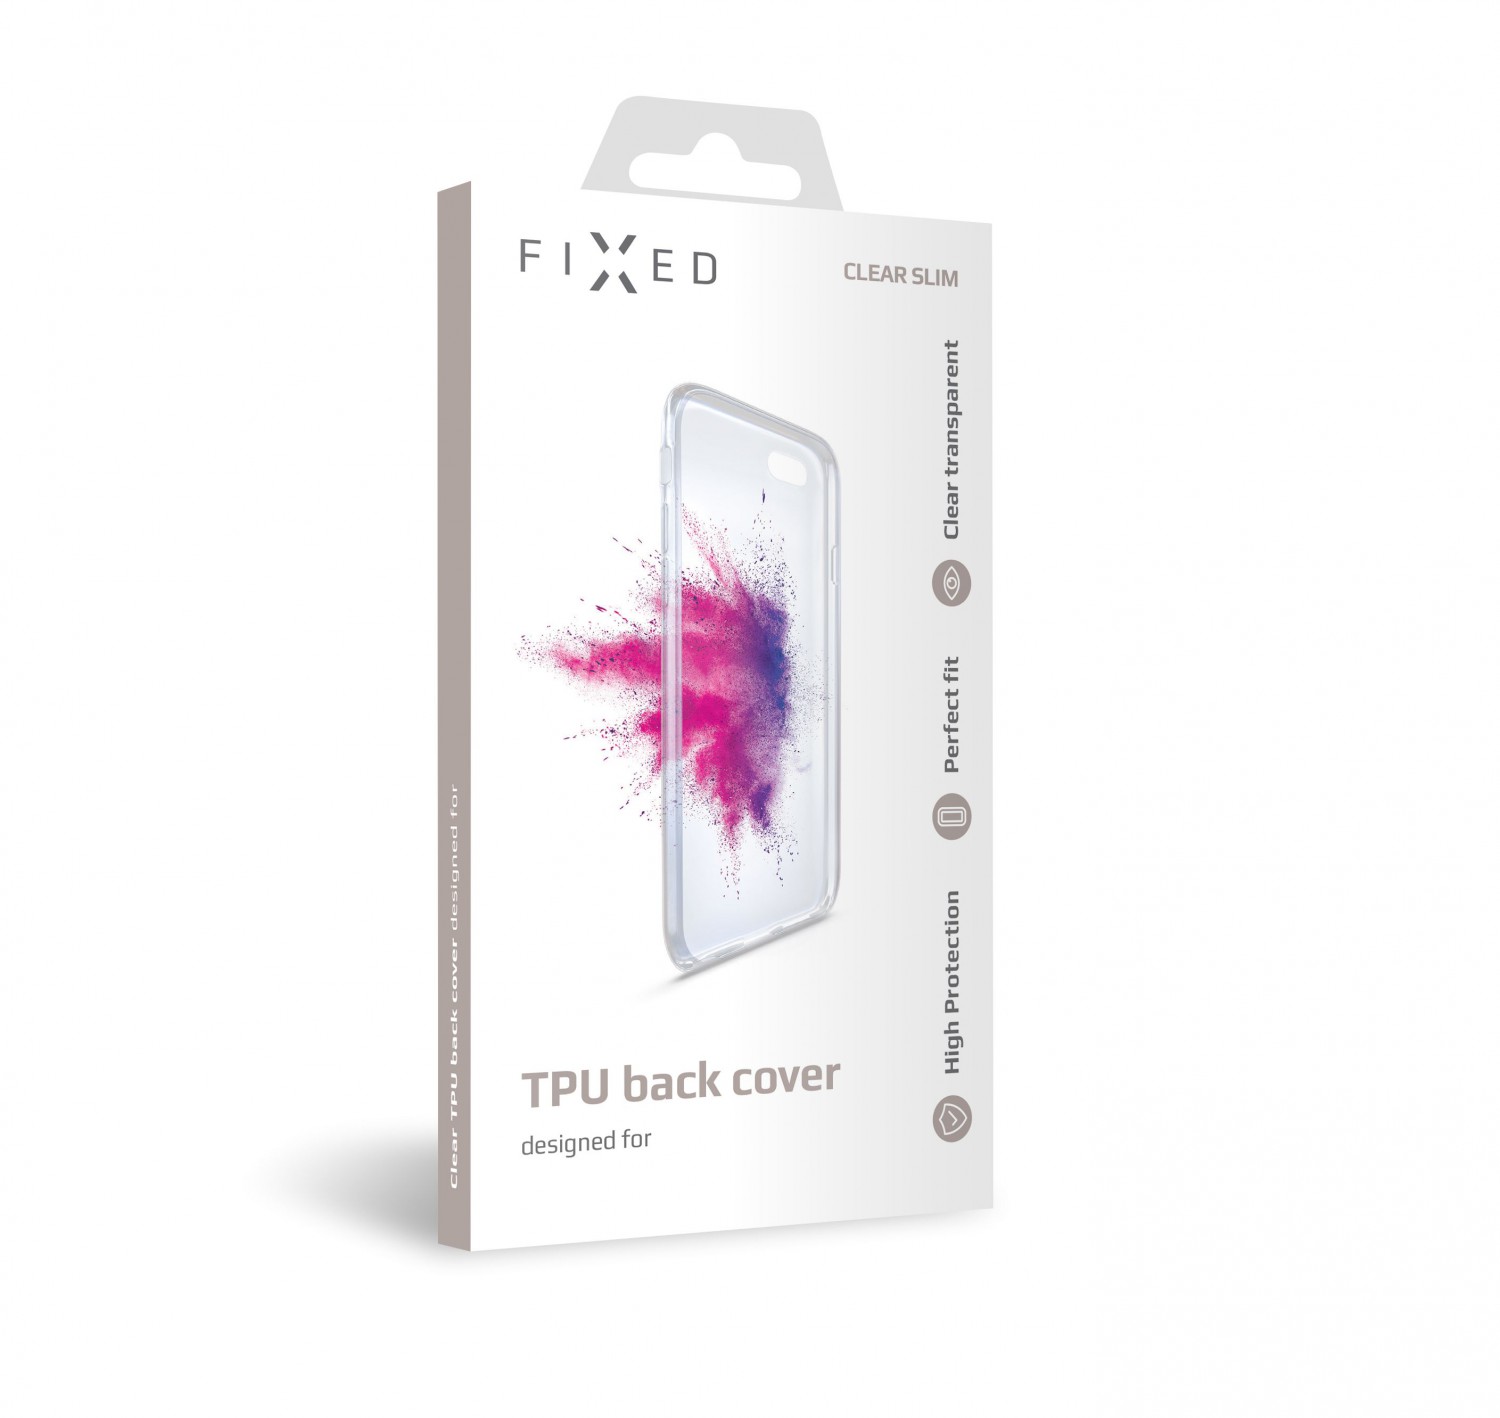 Silikonové pouzdro FIXED pro Asus Zenfone Max Pro M2, čiré